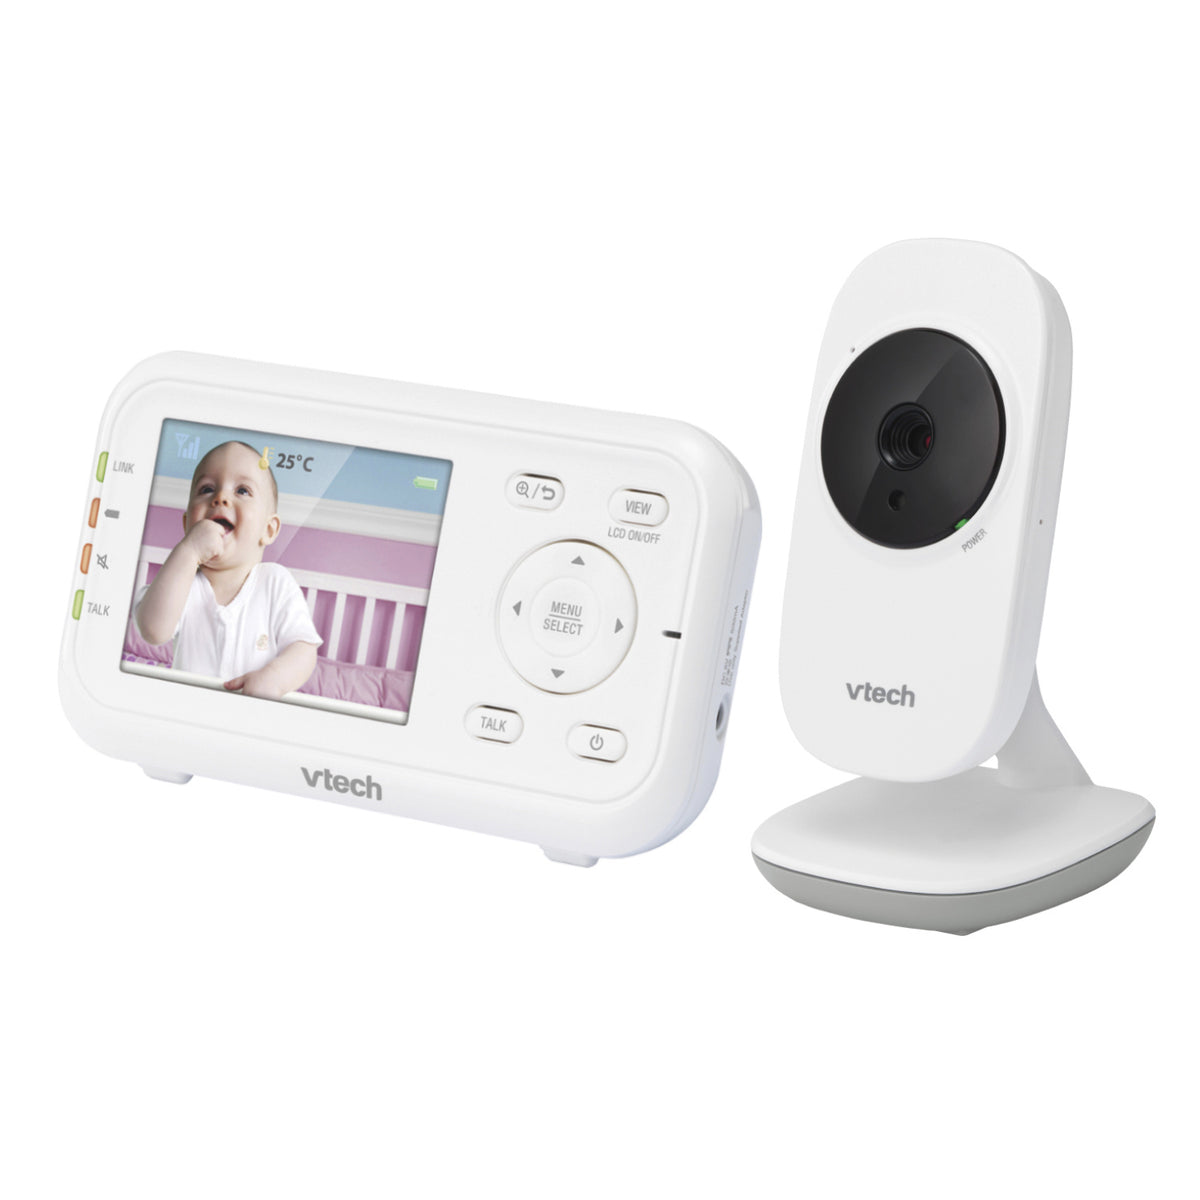 Vtech Baby Video Monitor 2.8